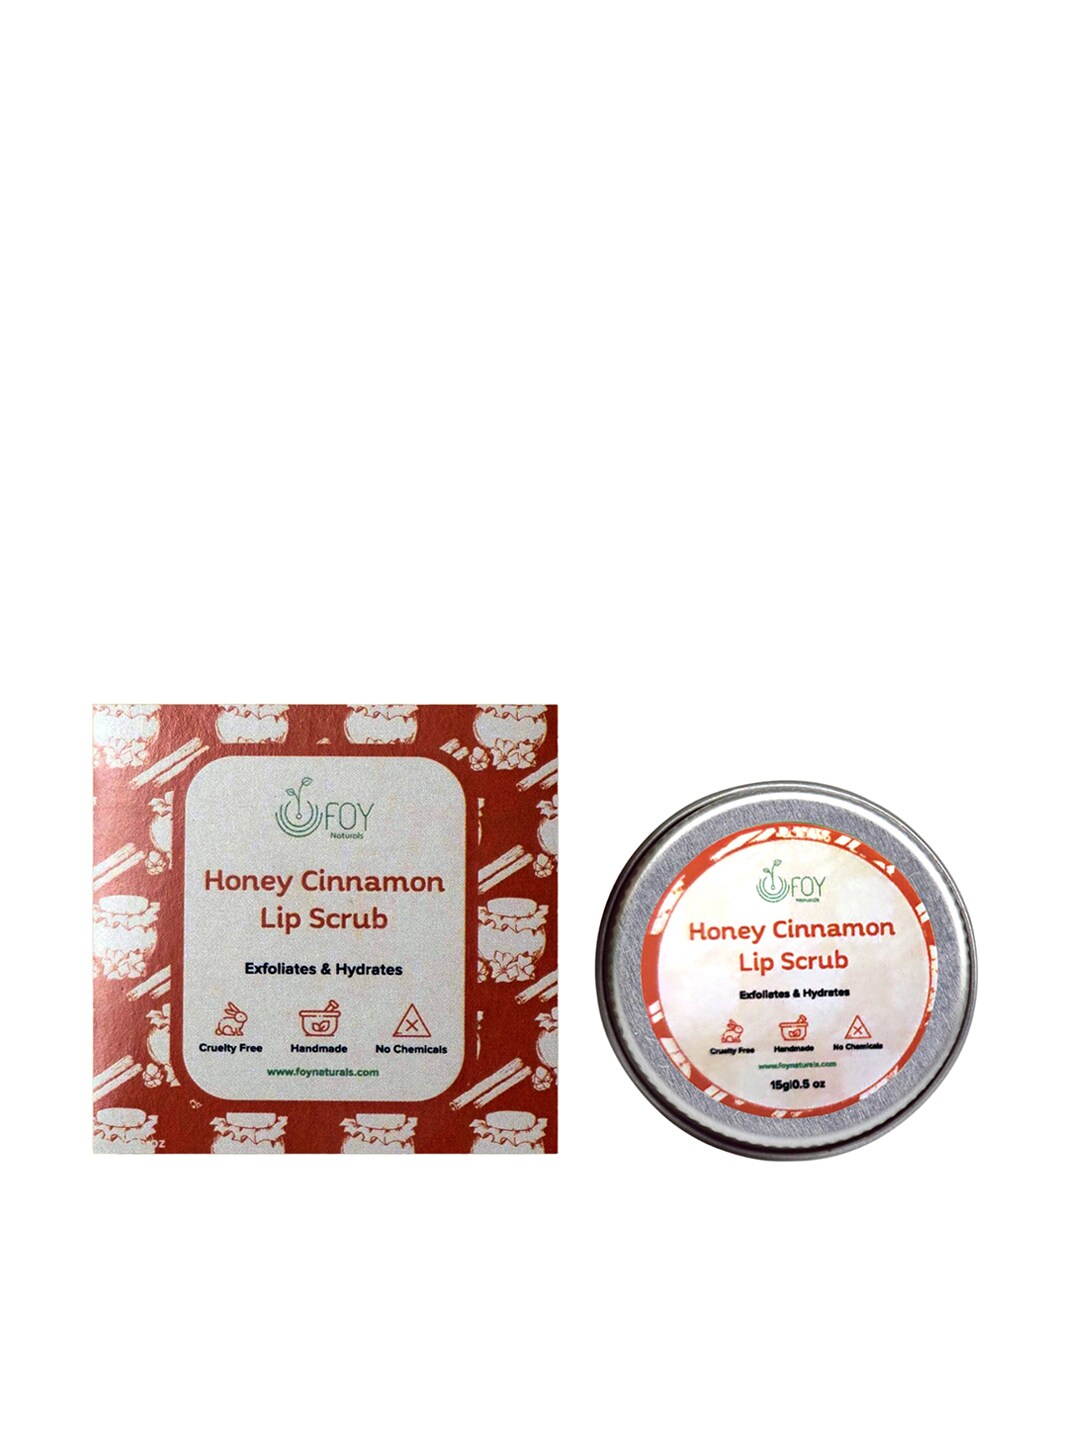 FOY Naturals Honey Cinnamon Lip Scrub 15 g Price in India